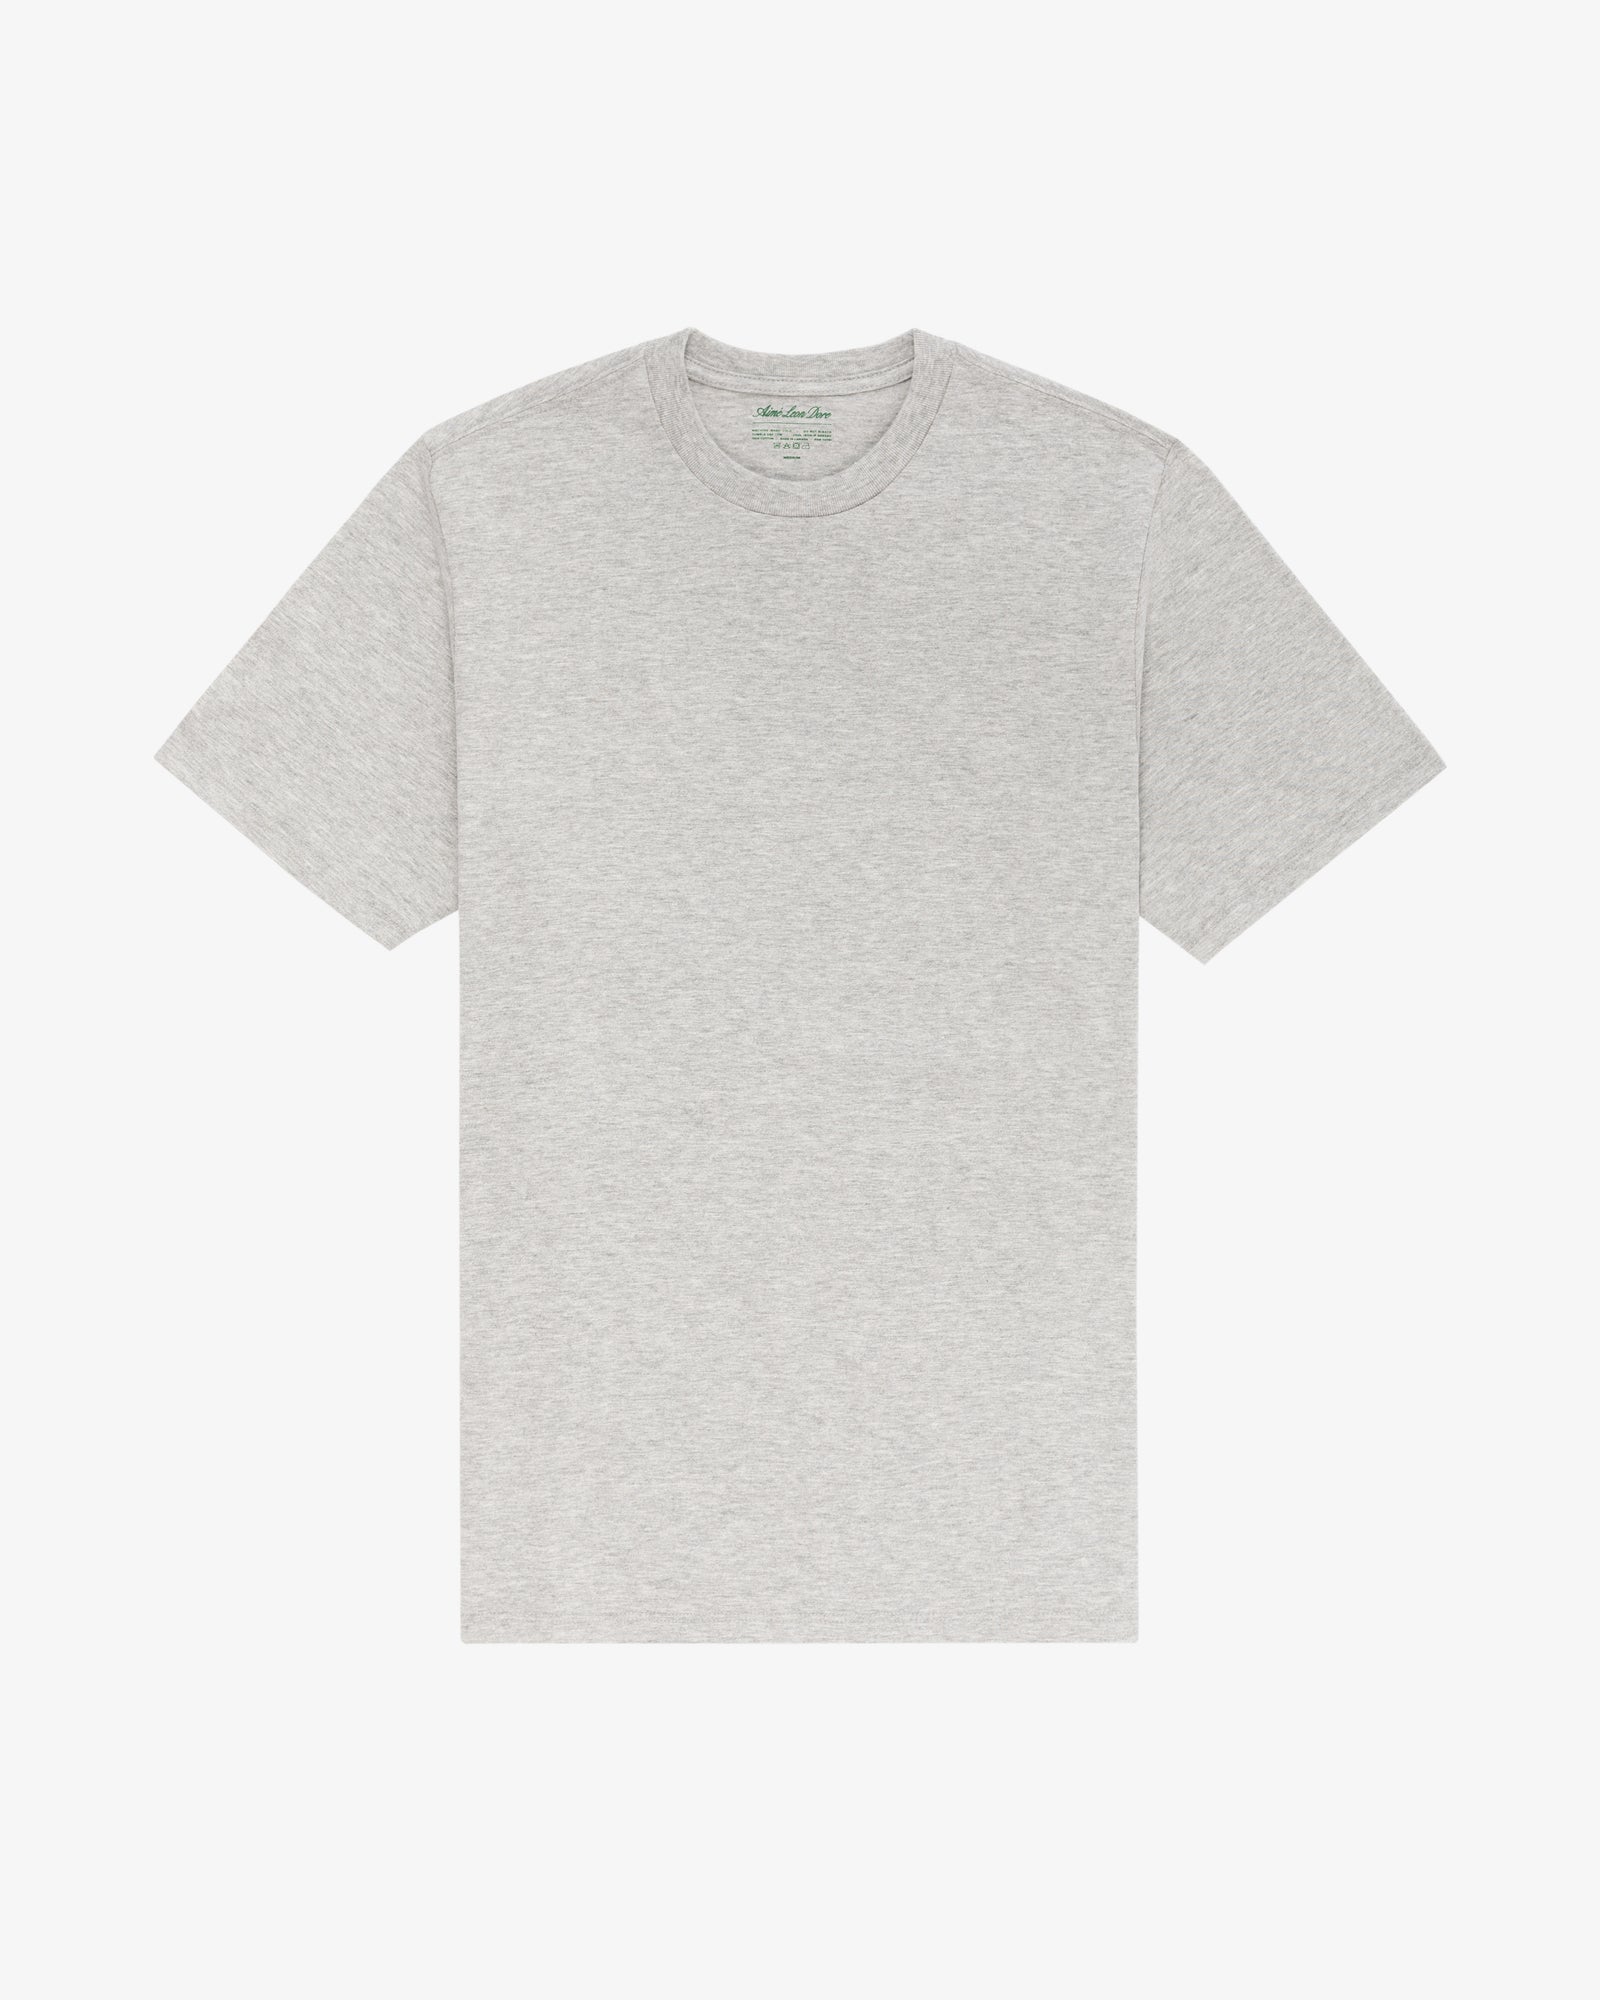 Unboxing this minimal & classic #AimeLeonDore t-shirt and baseball cap